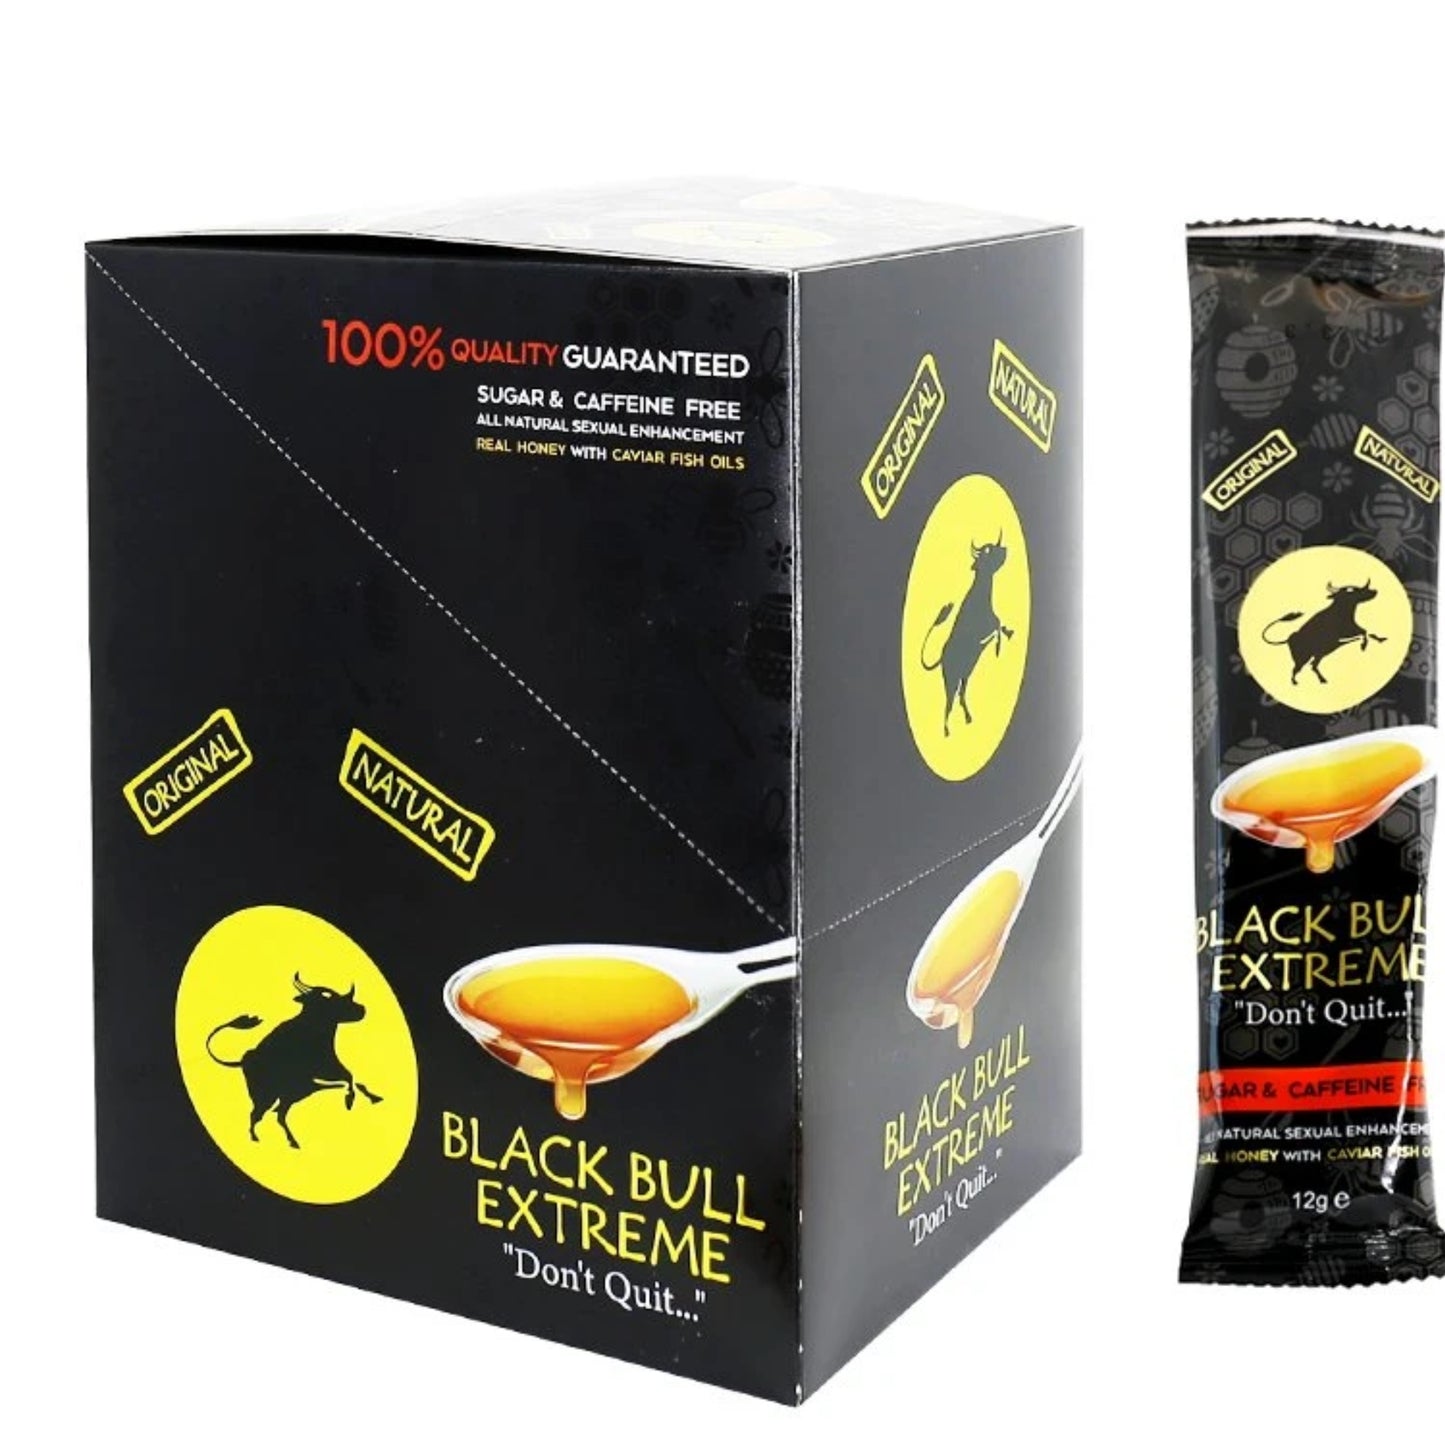 Black Bull Extreme Spoons Honey "Don't Quit" Pack of 12